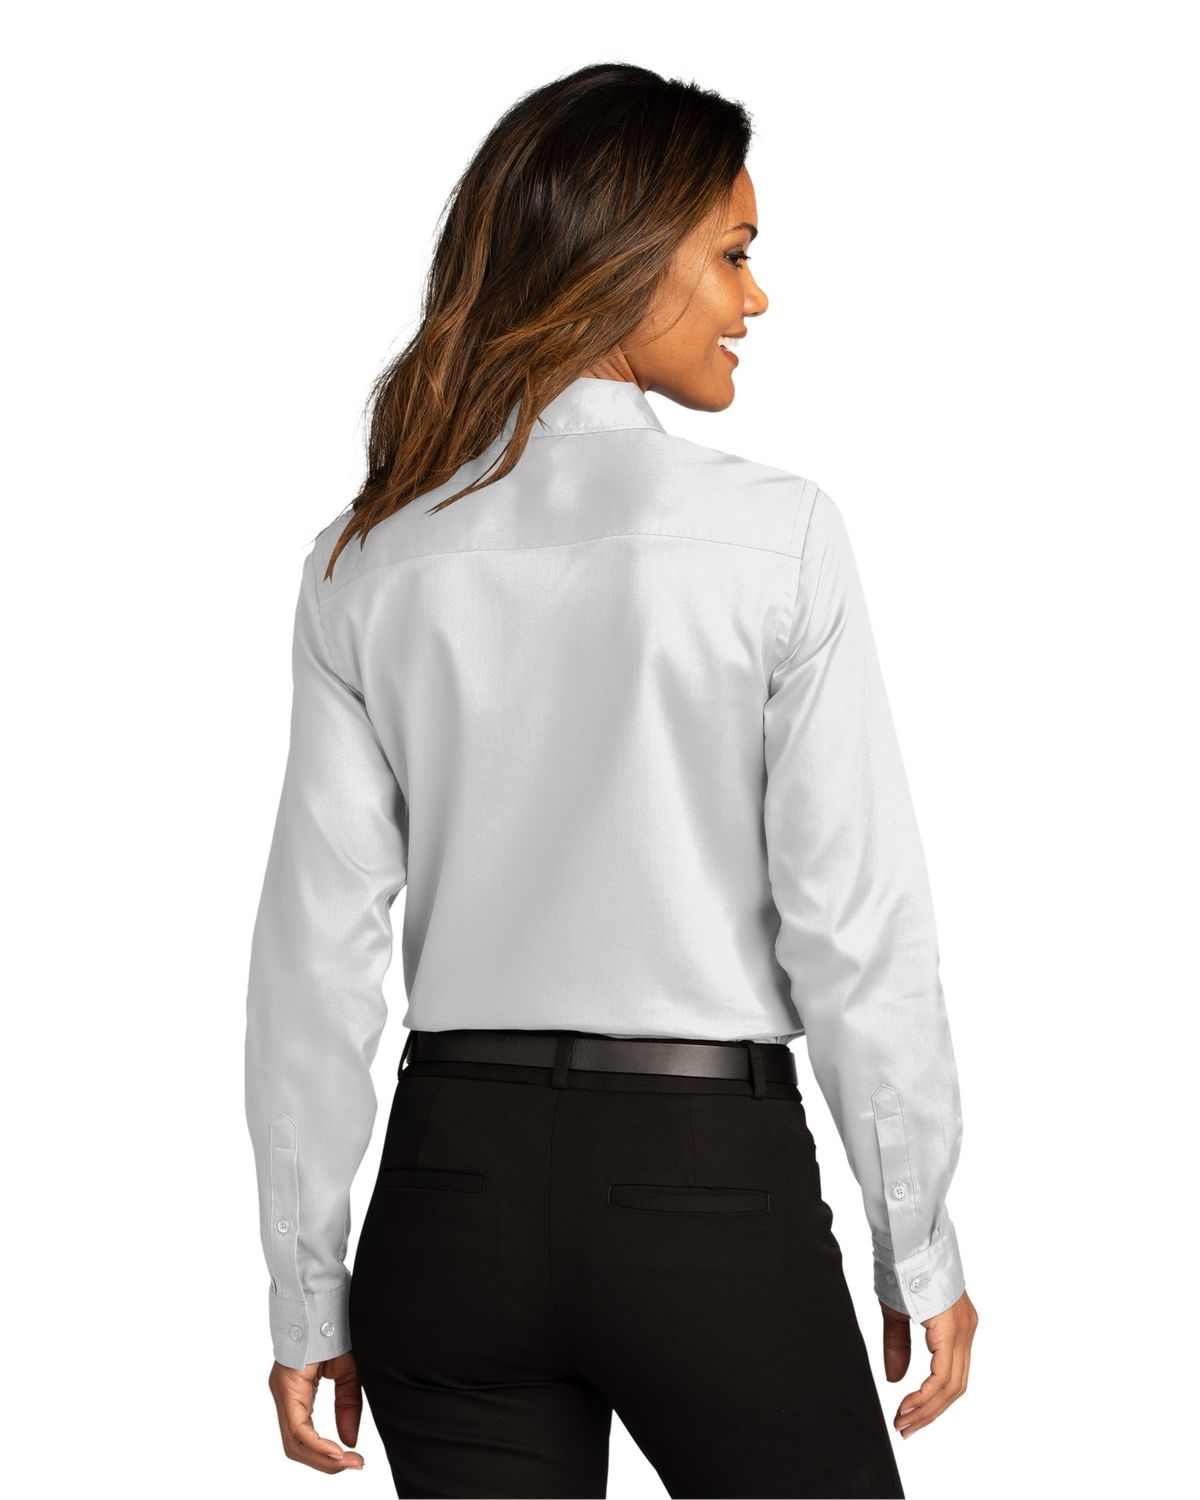 'Port Authority LW808 Ladies Long Sleeve SuperPro React Twill Shirt.'